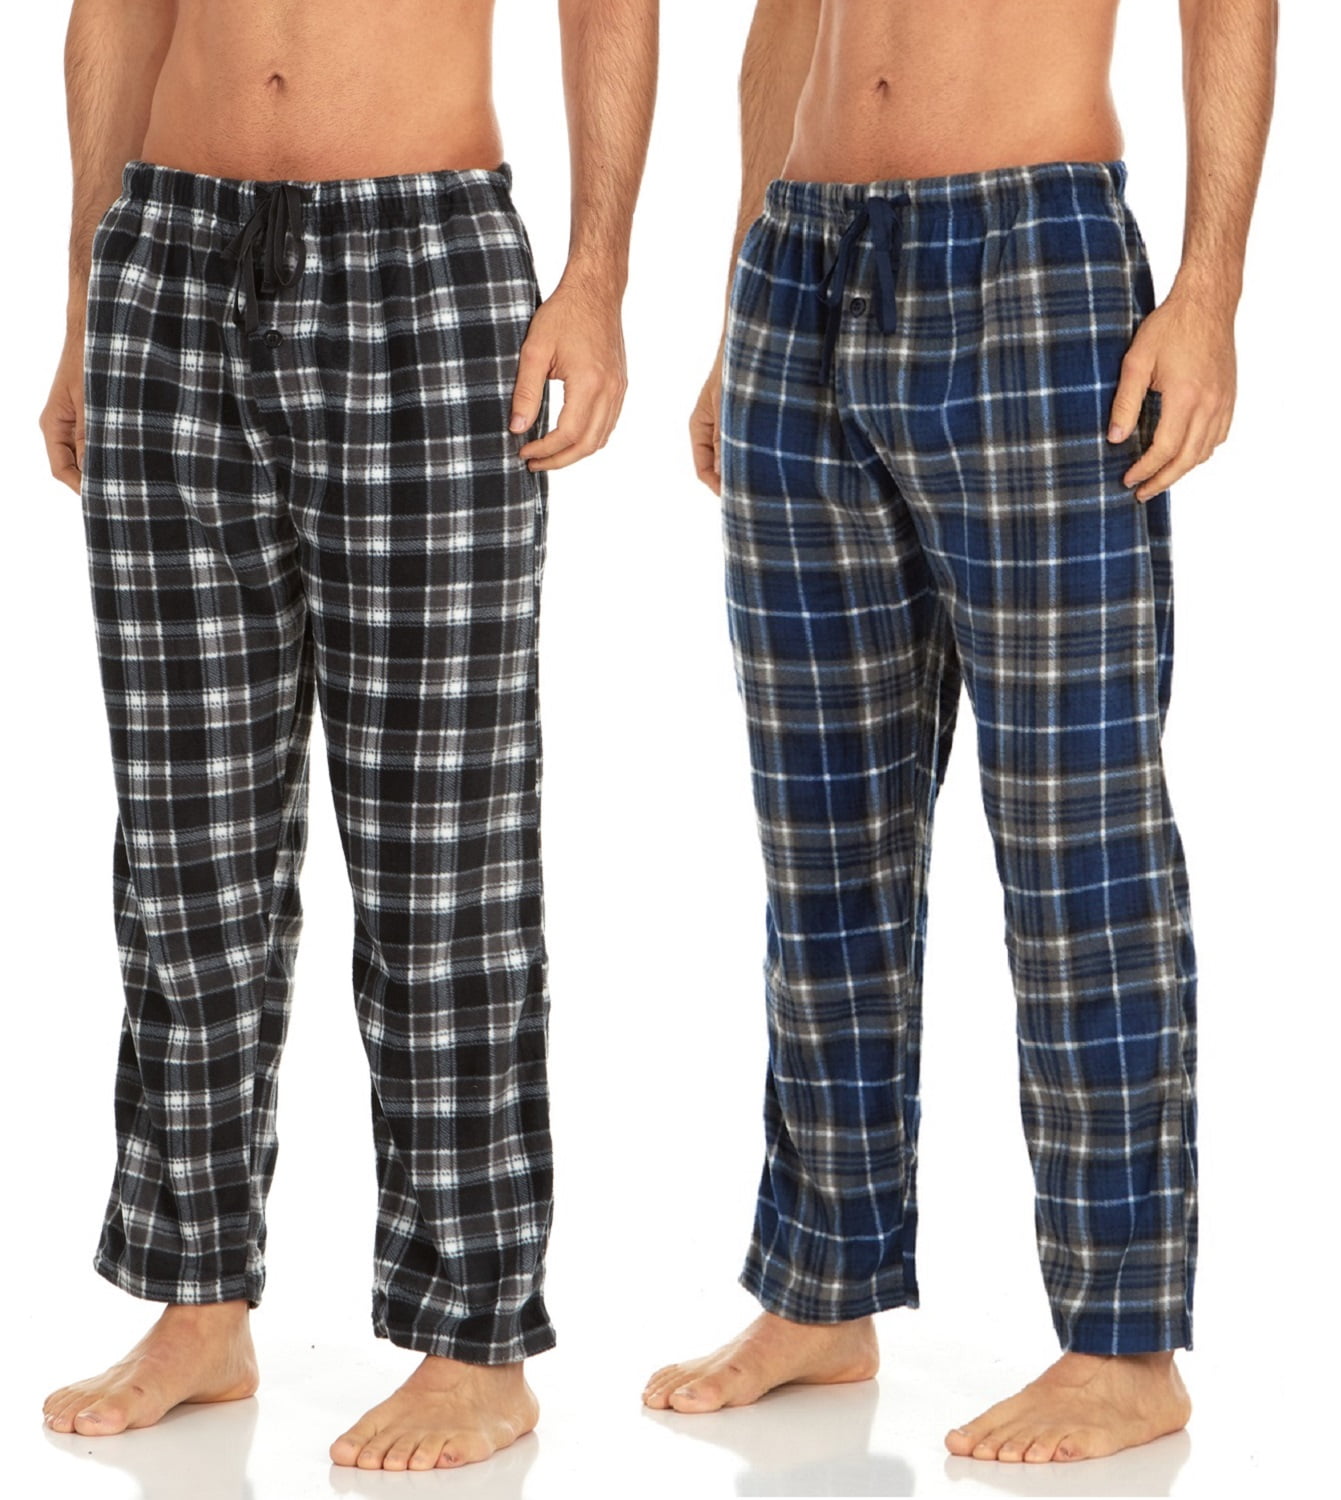 Men’s Microfleece Pajama Pants/Lounge Wear with Pockets - Walmart.com